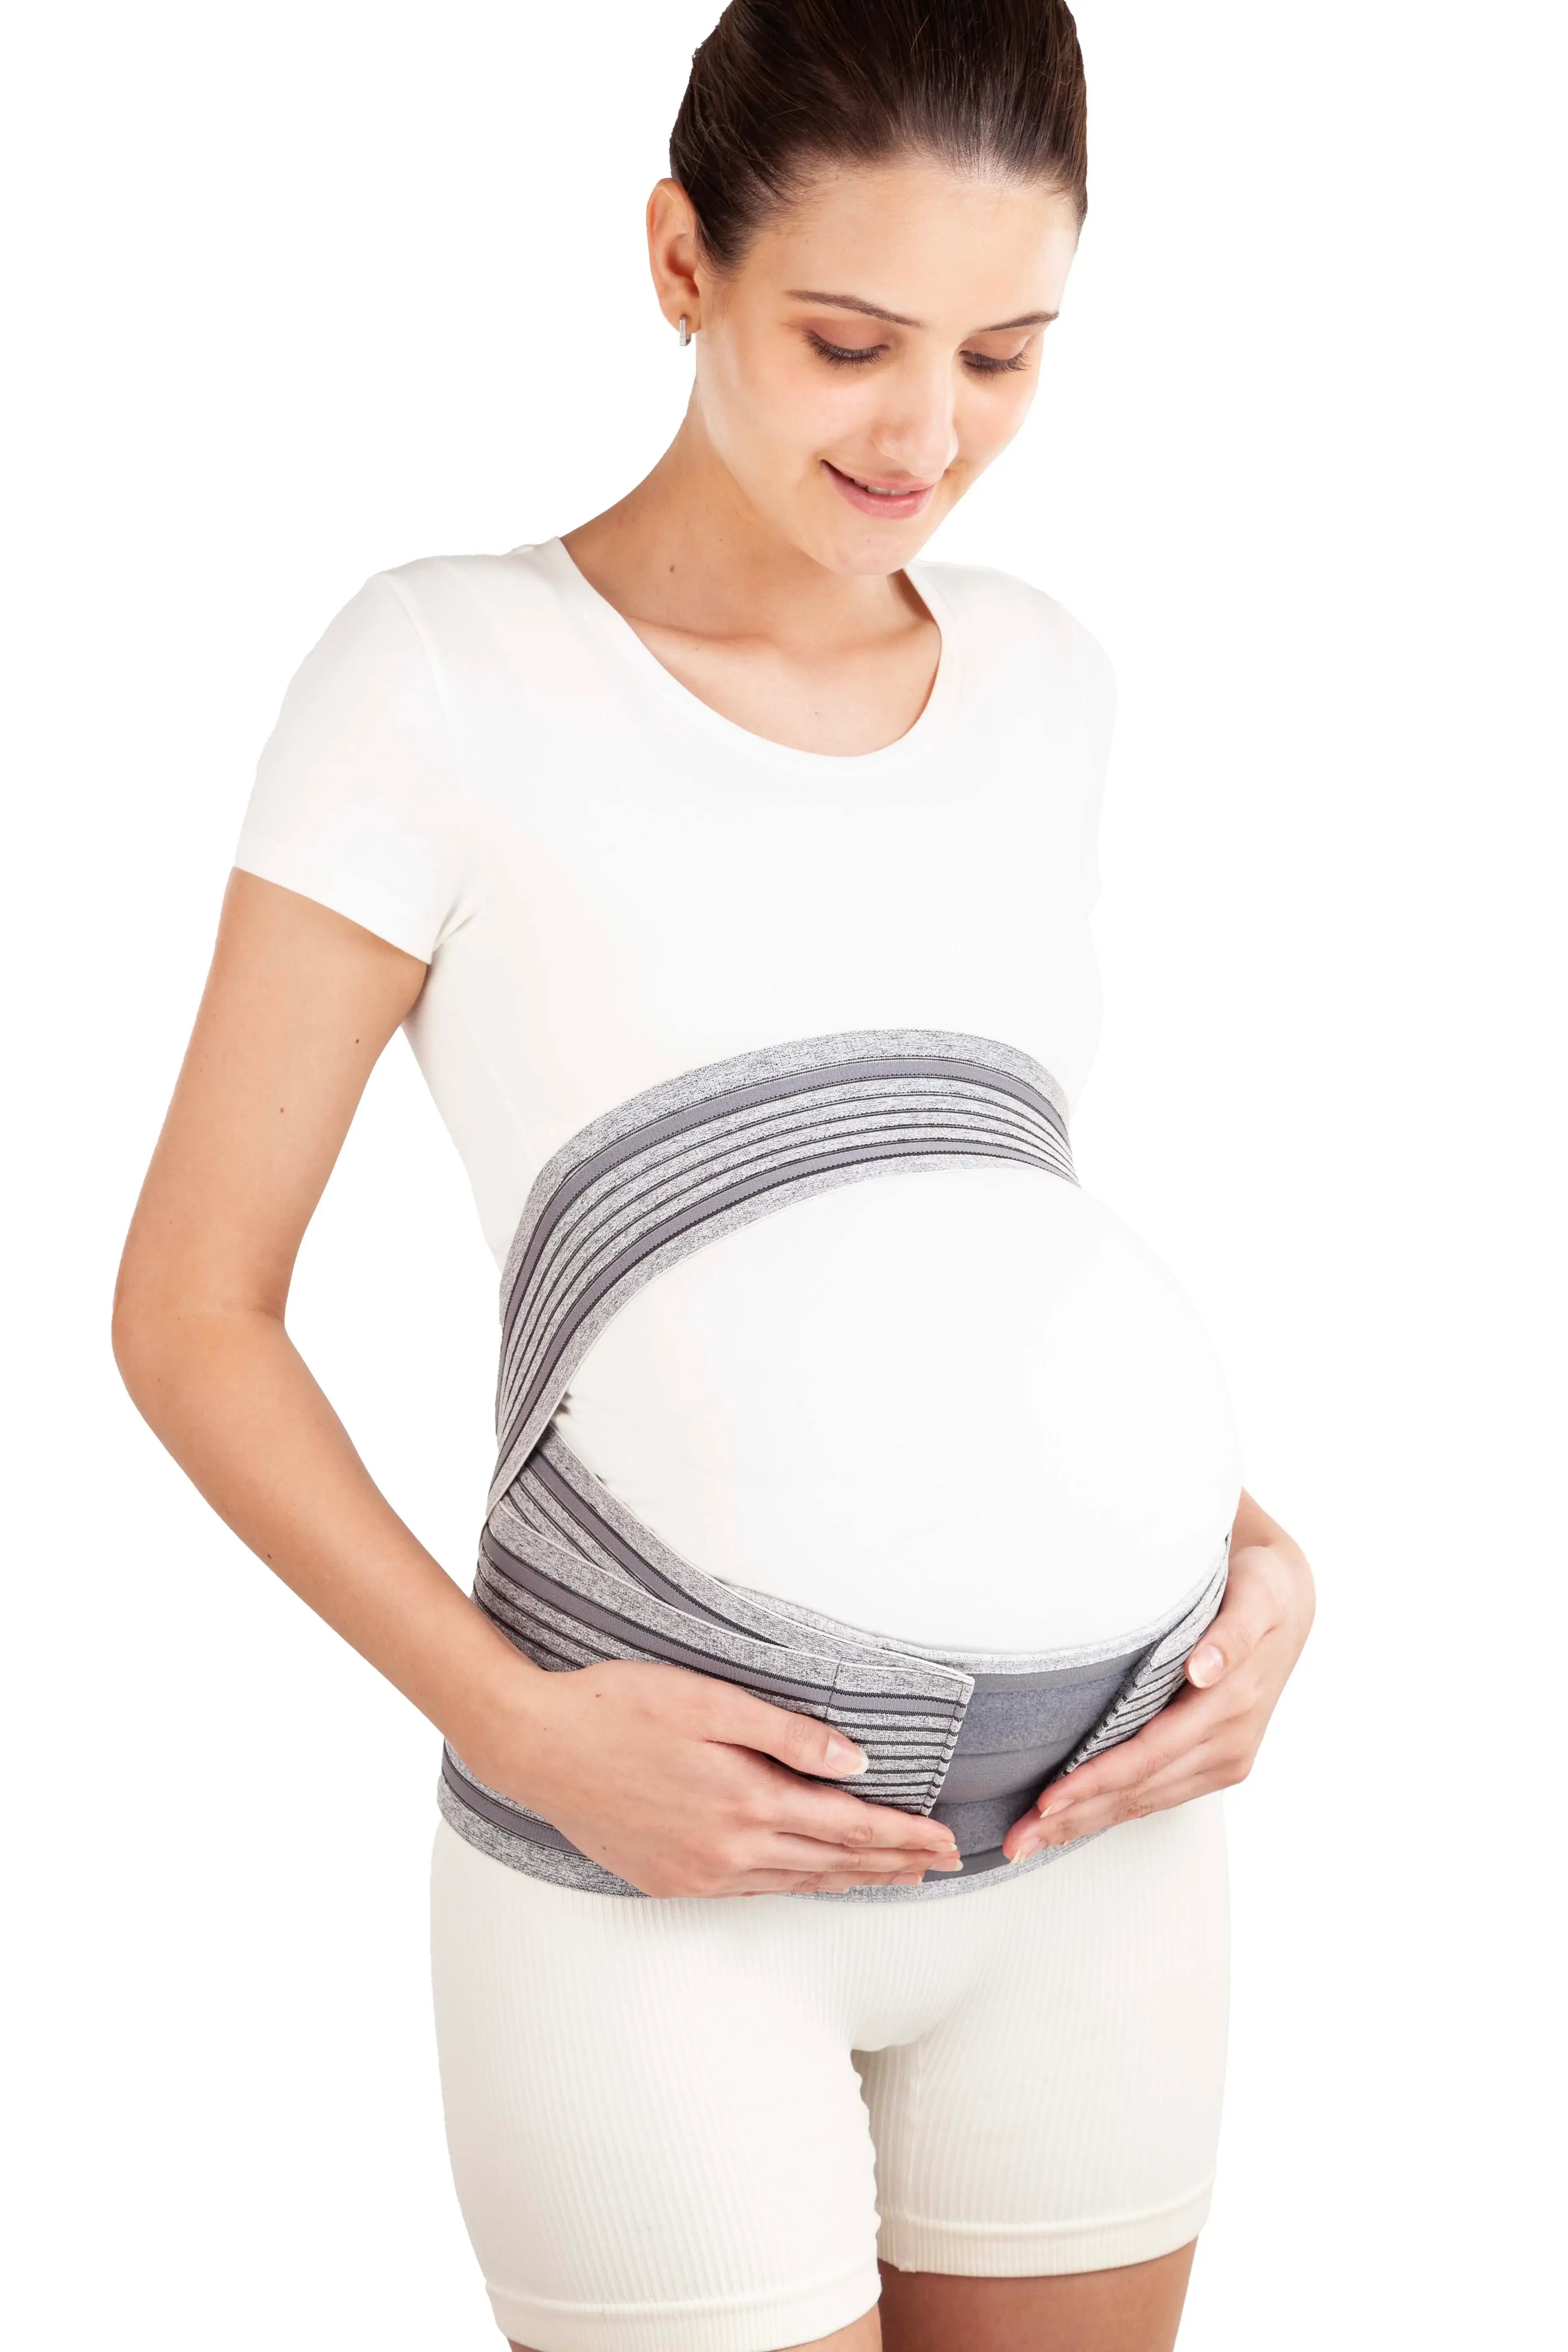 Medemove Pregnancy Belt